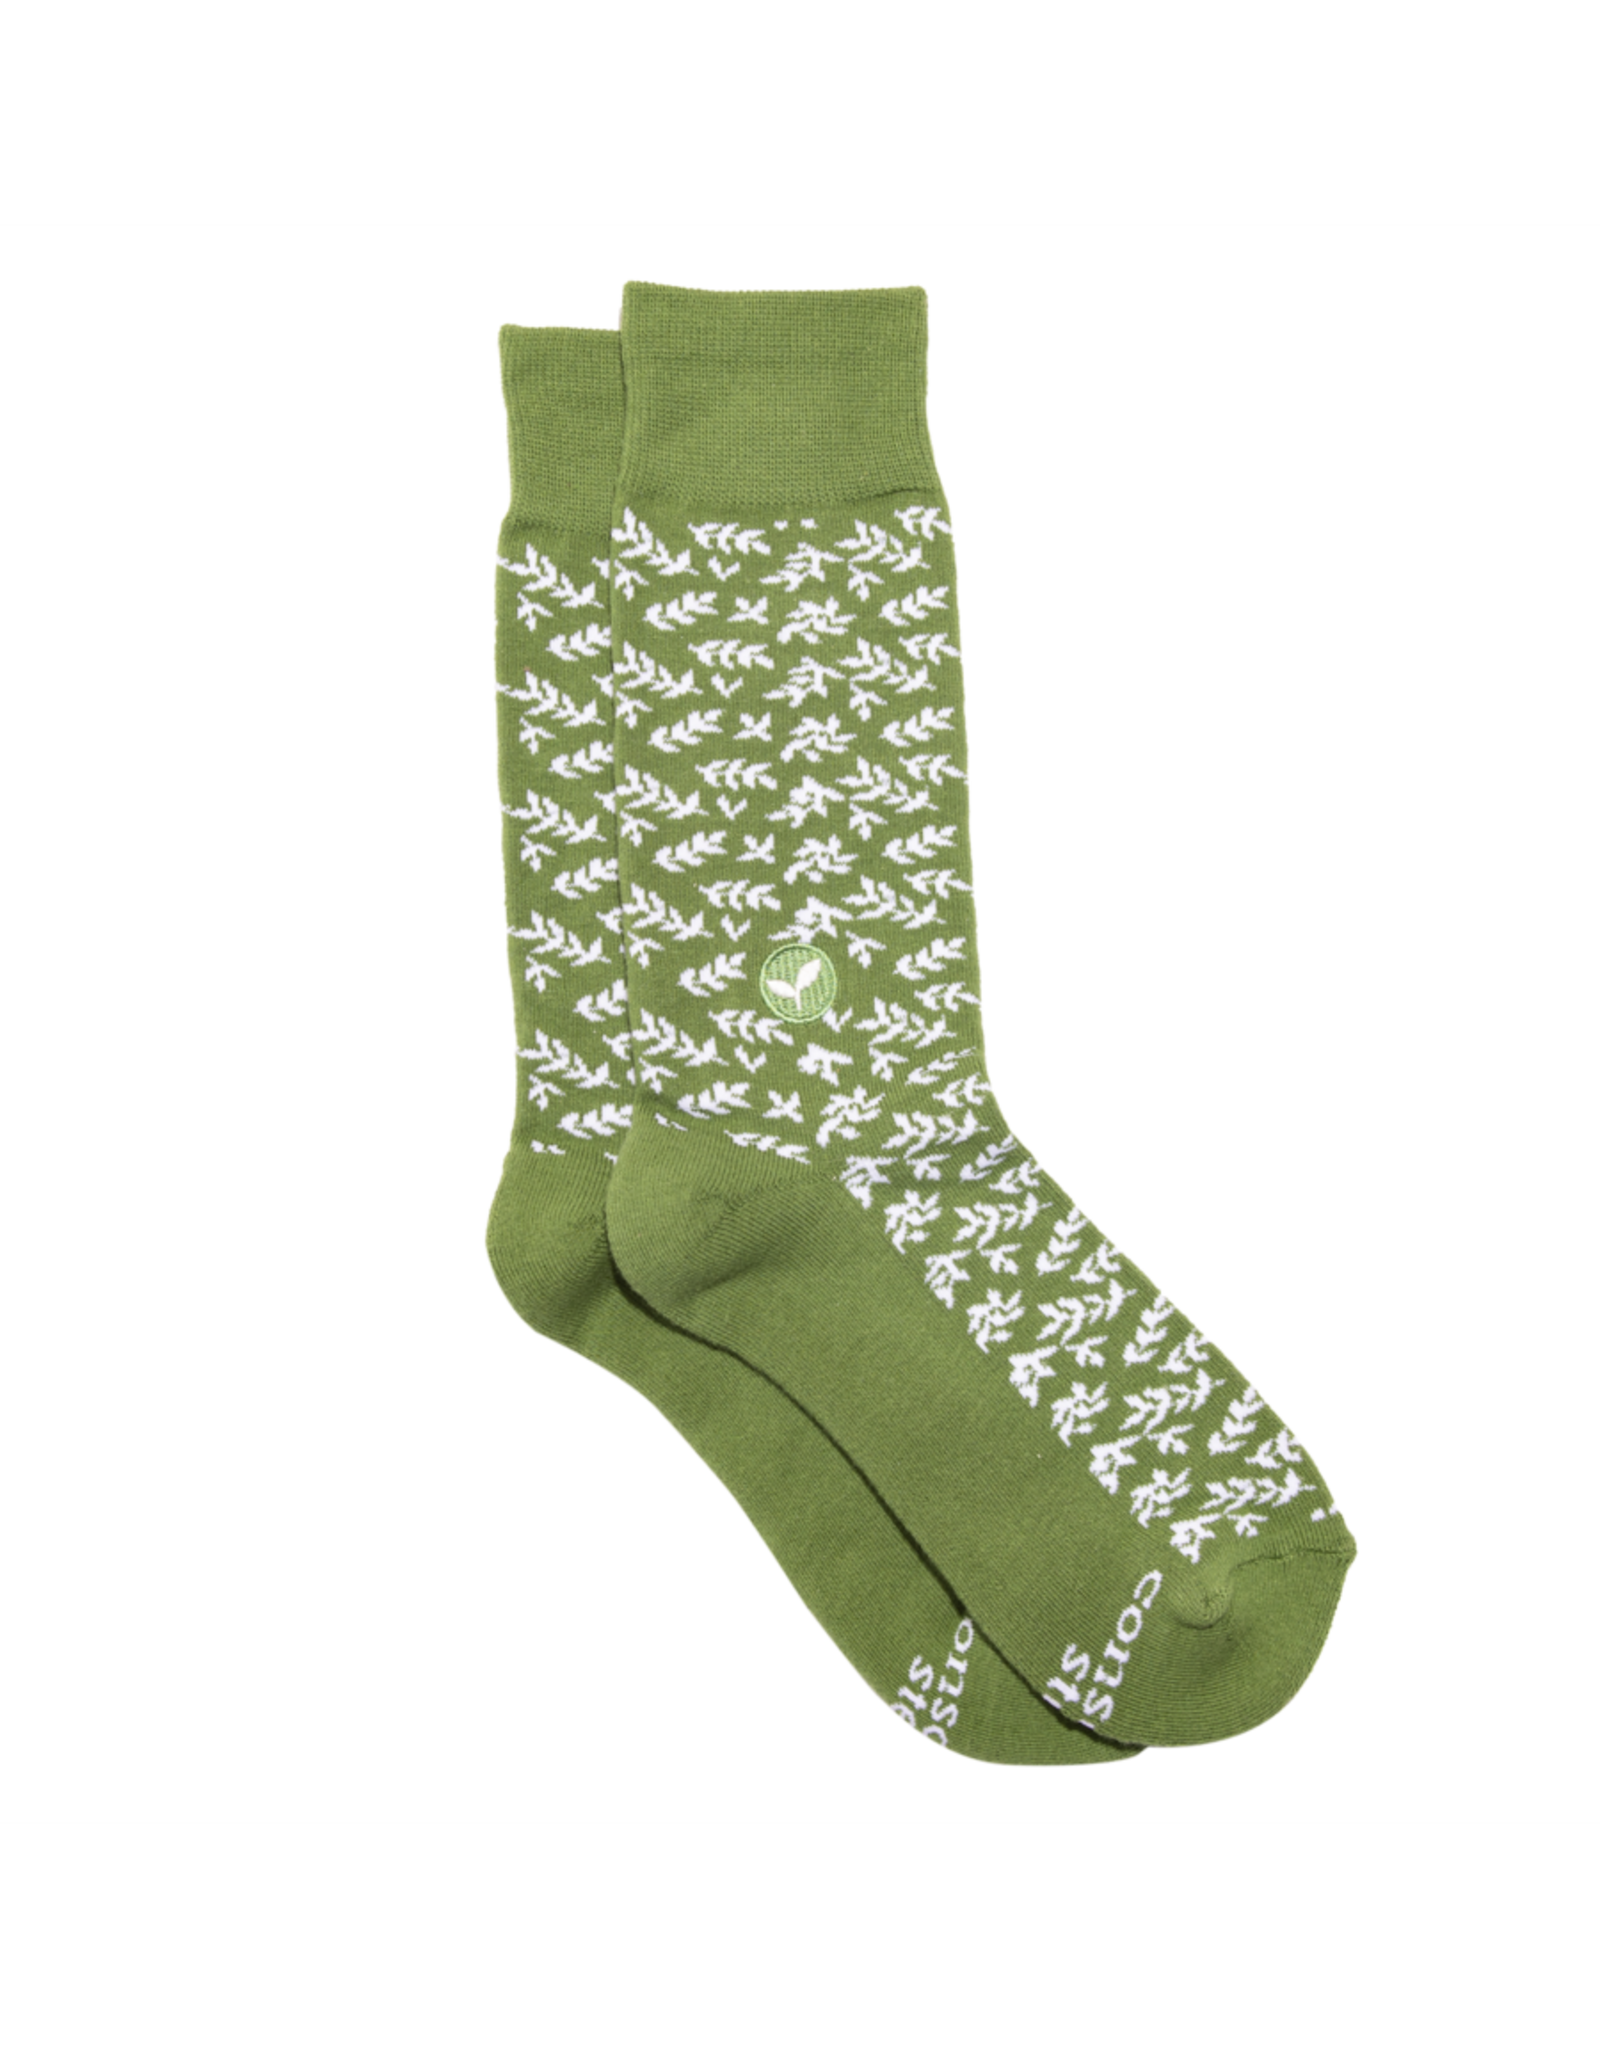 Socks that Plant Trees, Bright Green